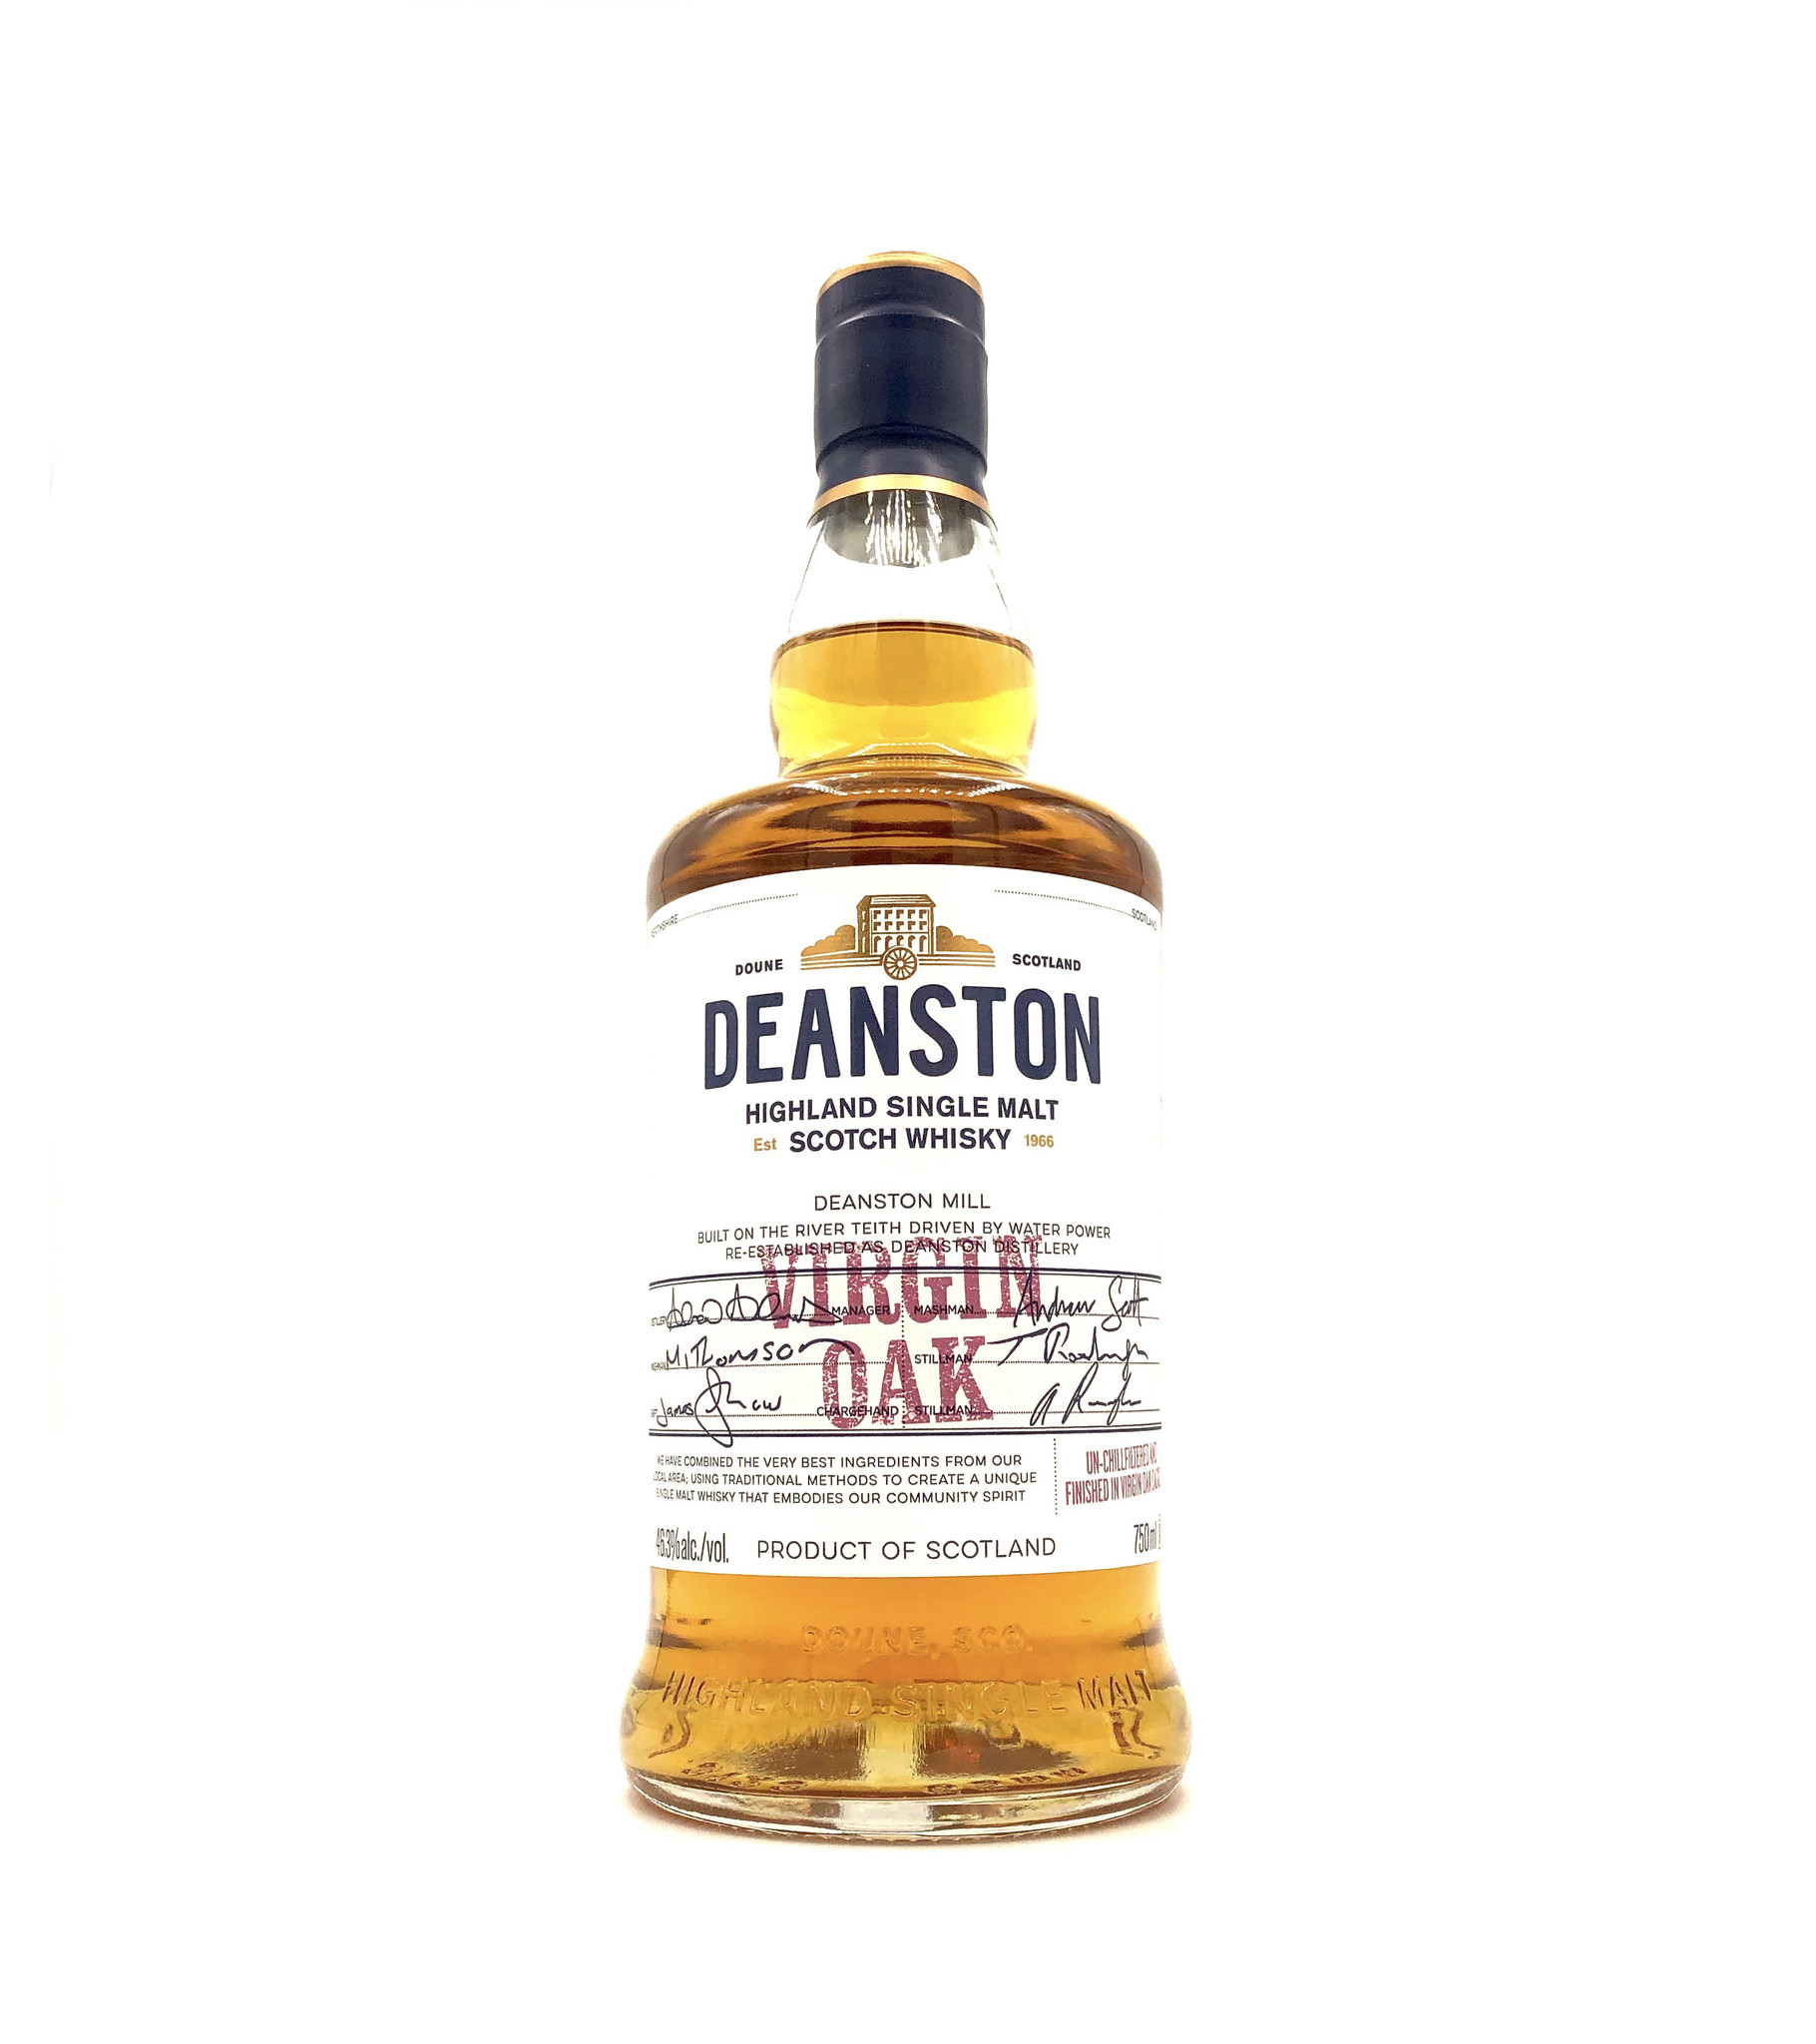 Deanston Highland Single Malt Scotch